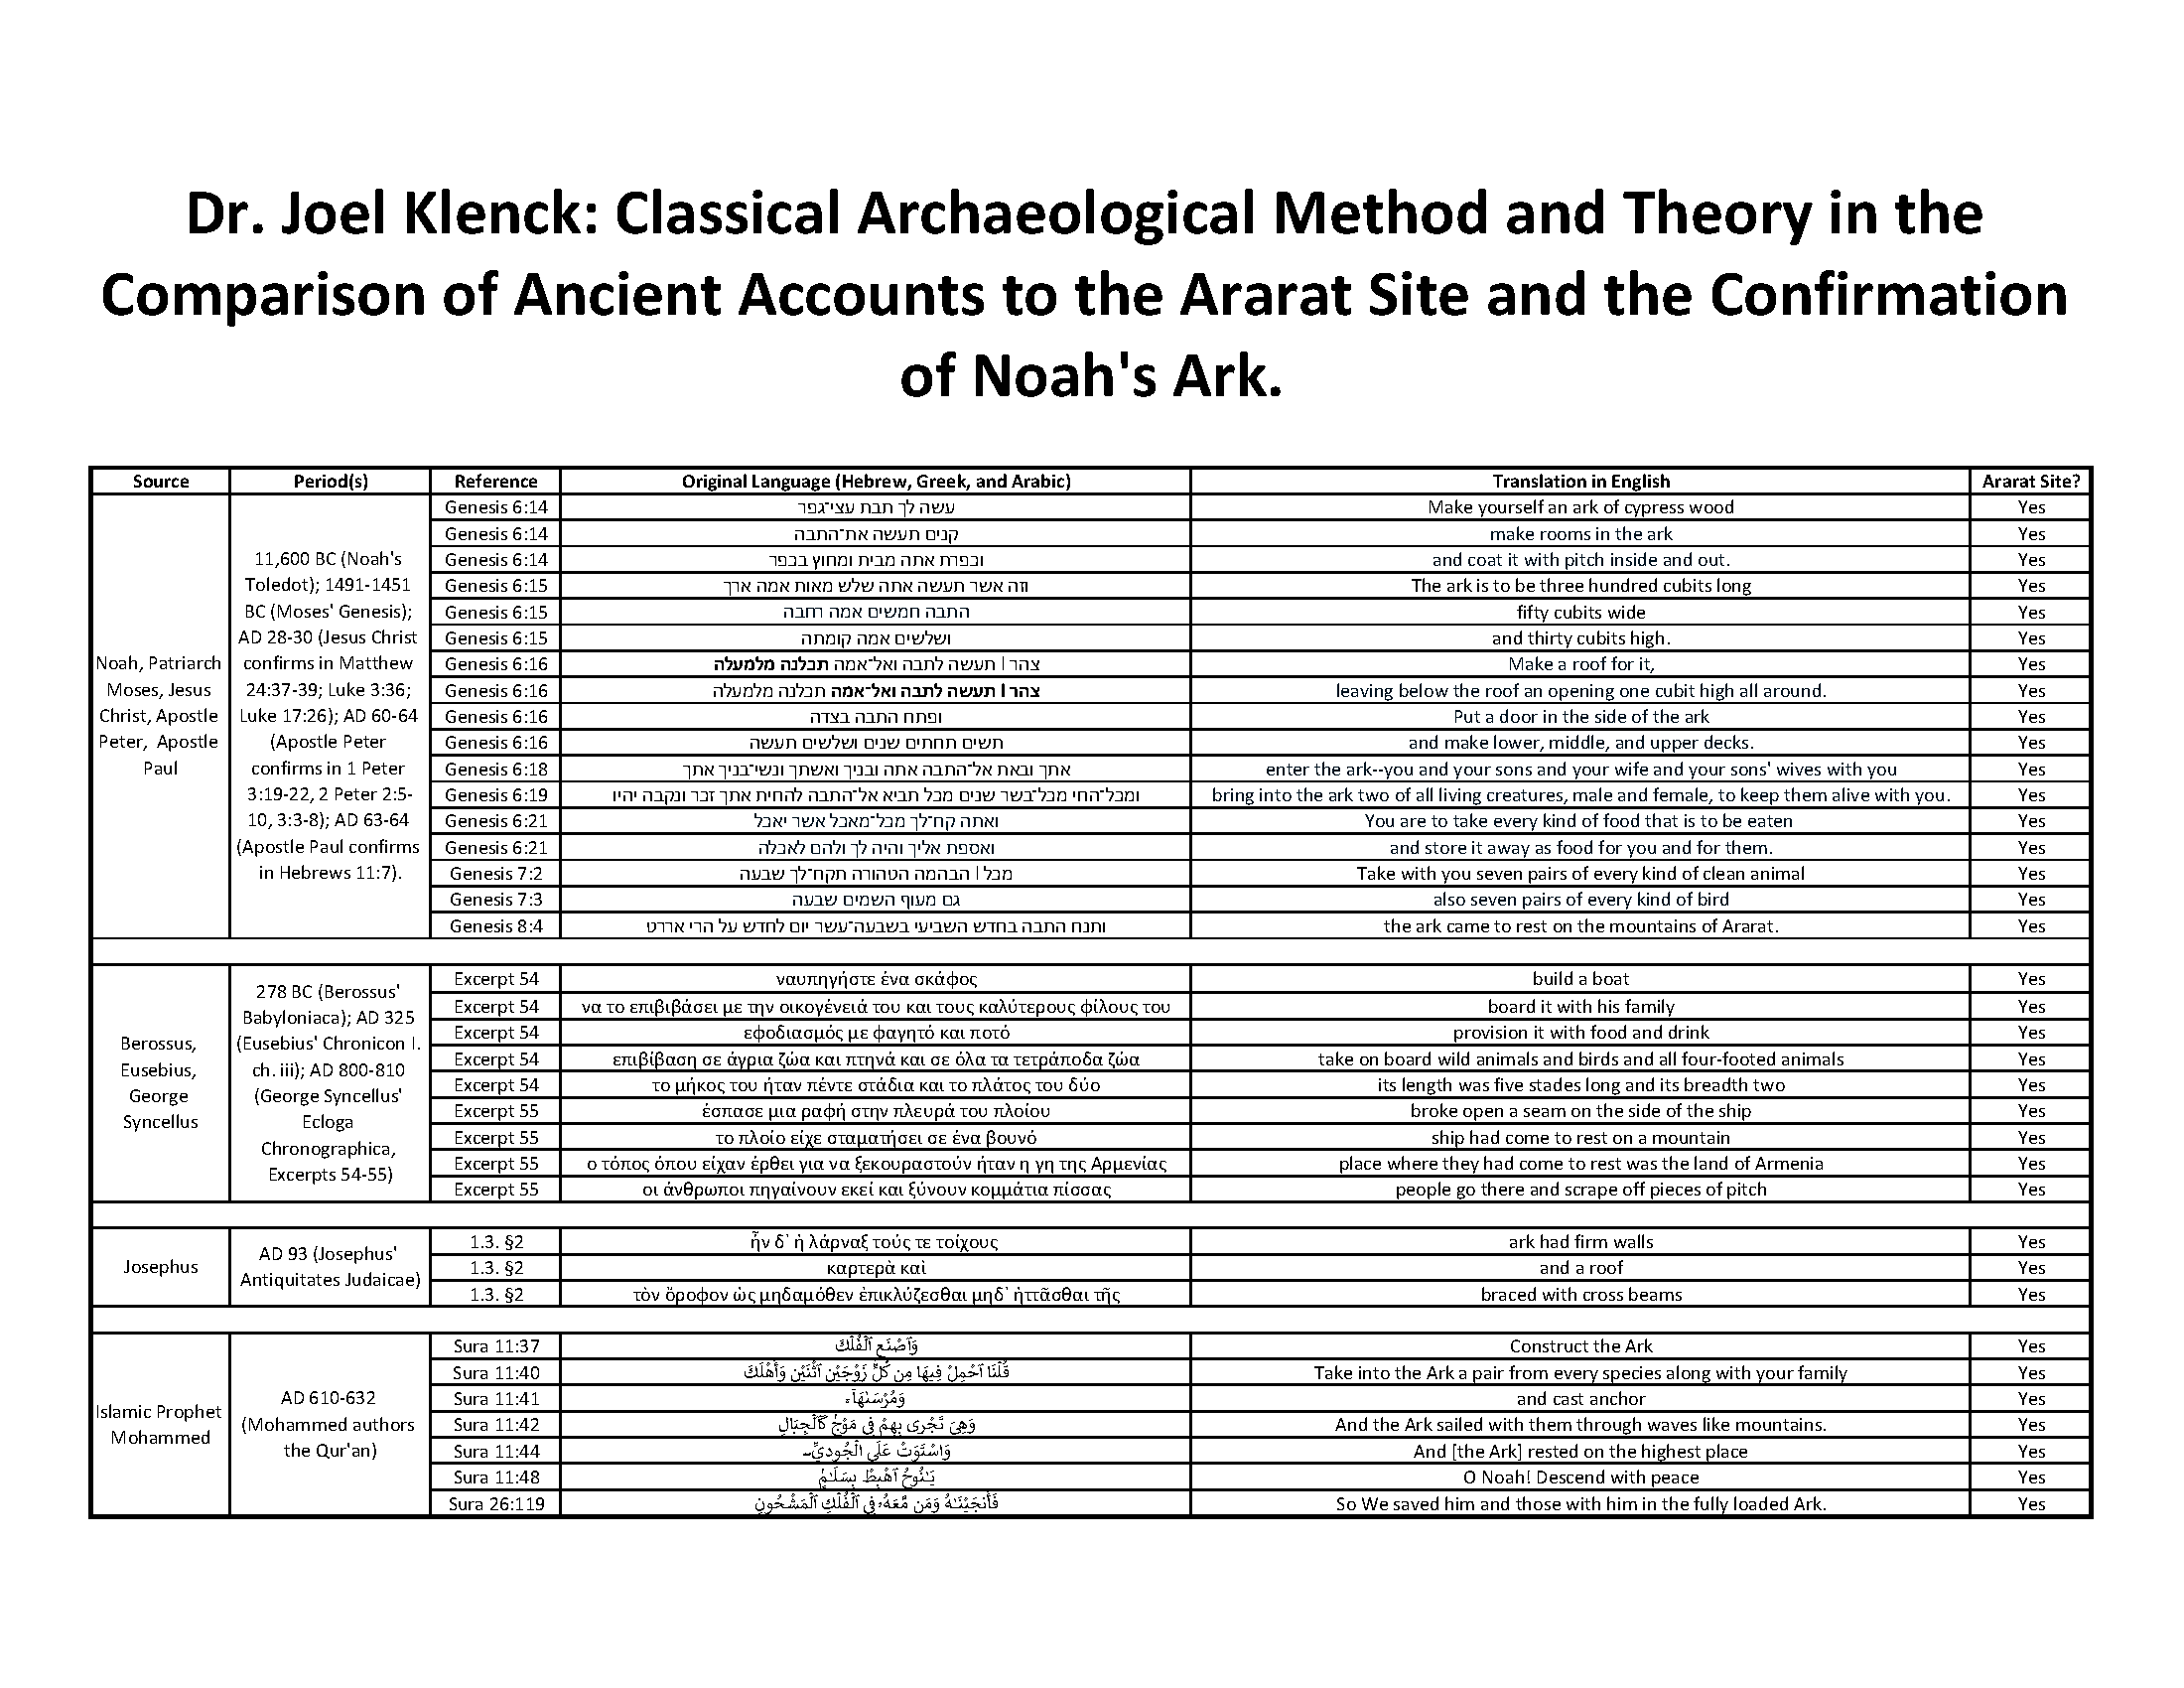 Dr. Joel Klenck Classical Archaeology Confirms Ark of Noah'